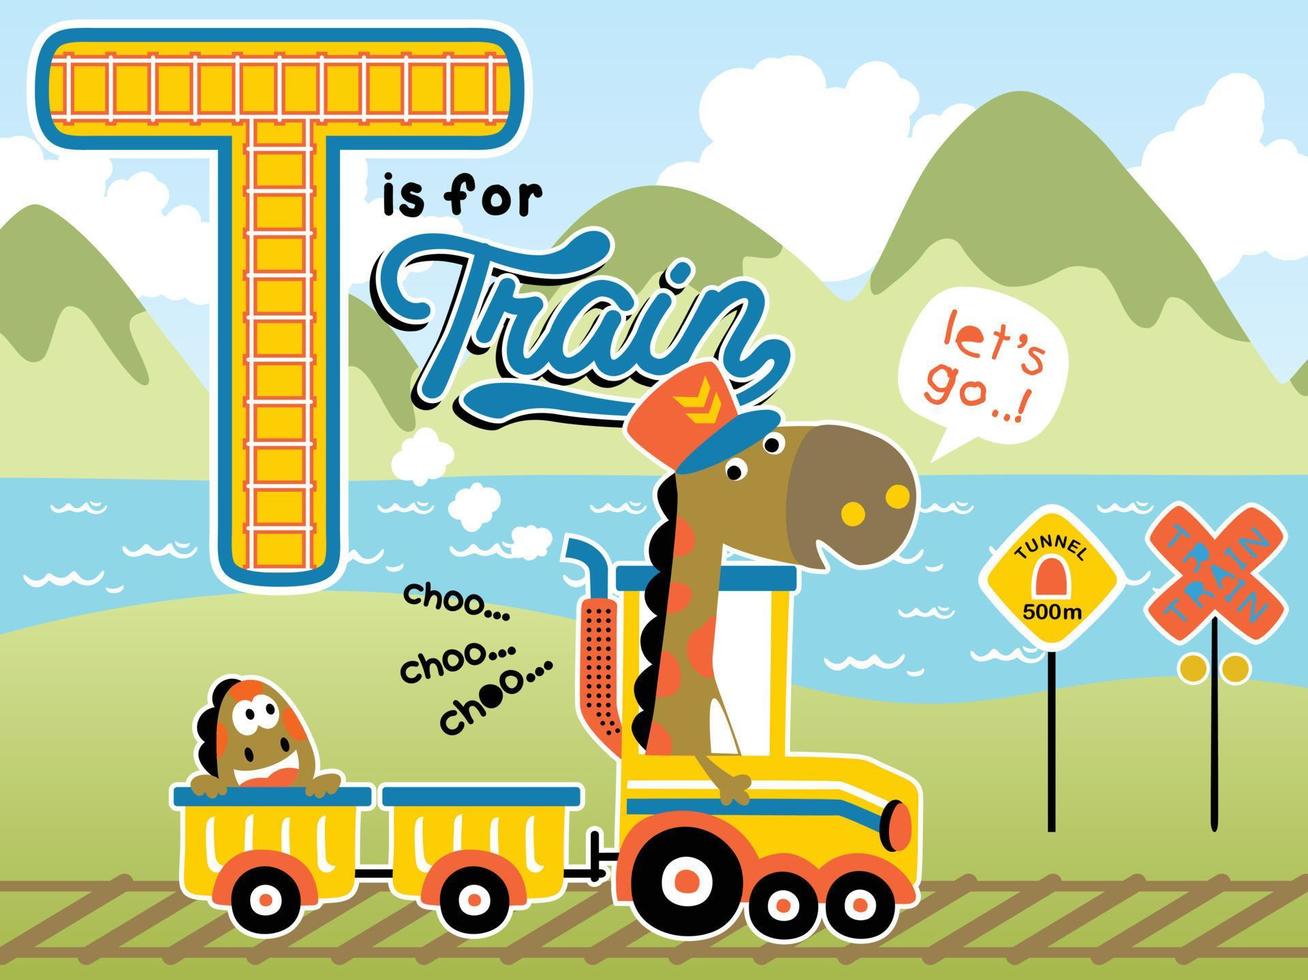 Vector cartoon of dinosaurs on steam train, railway elements on landscape background